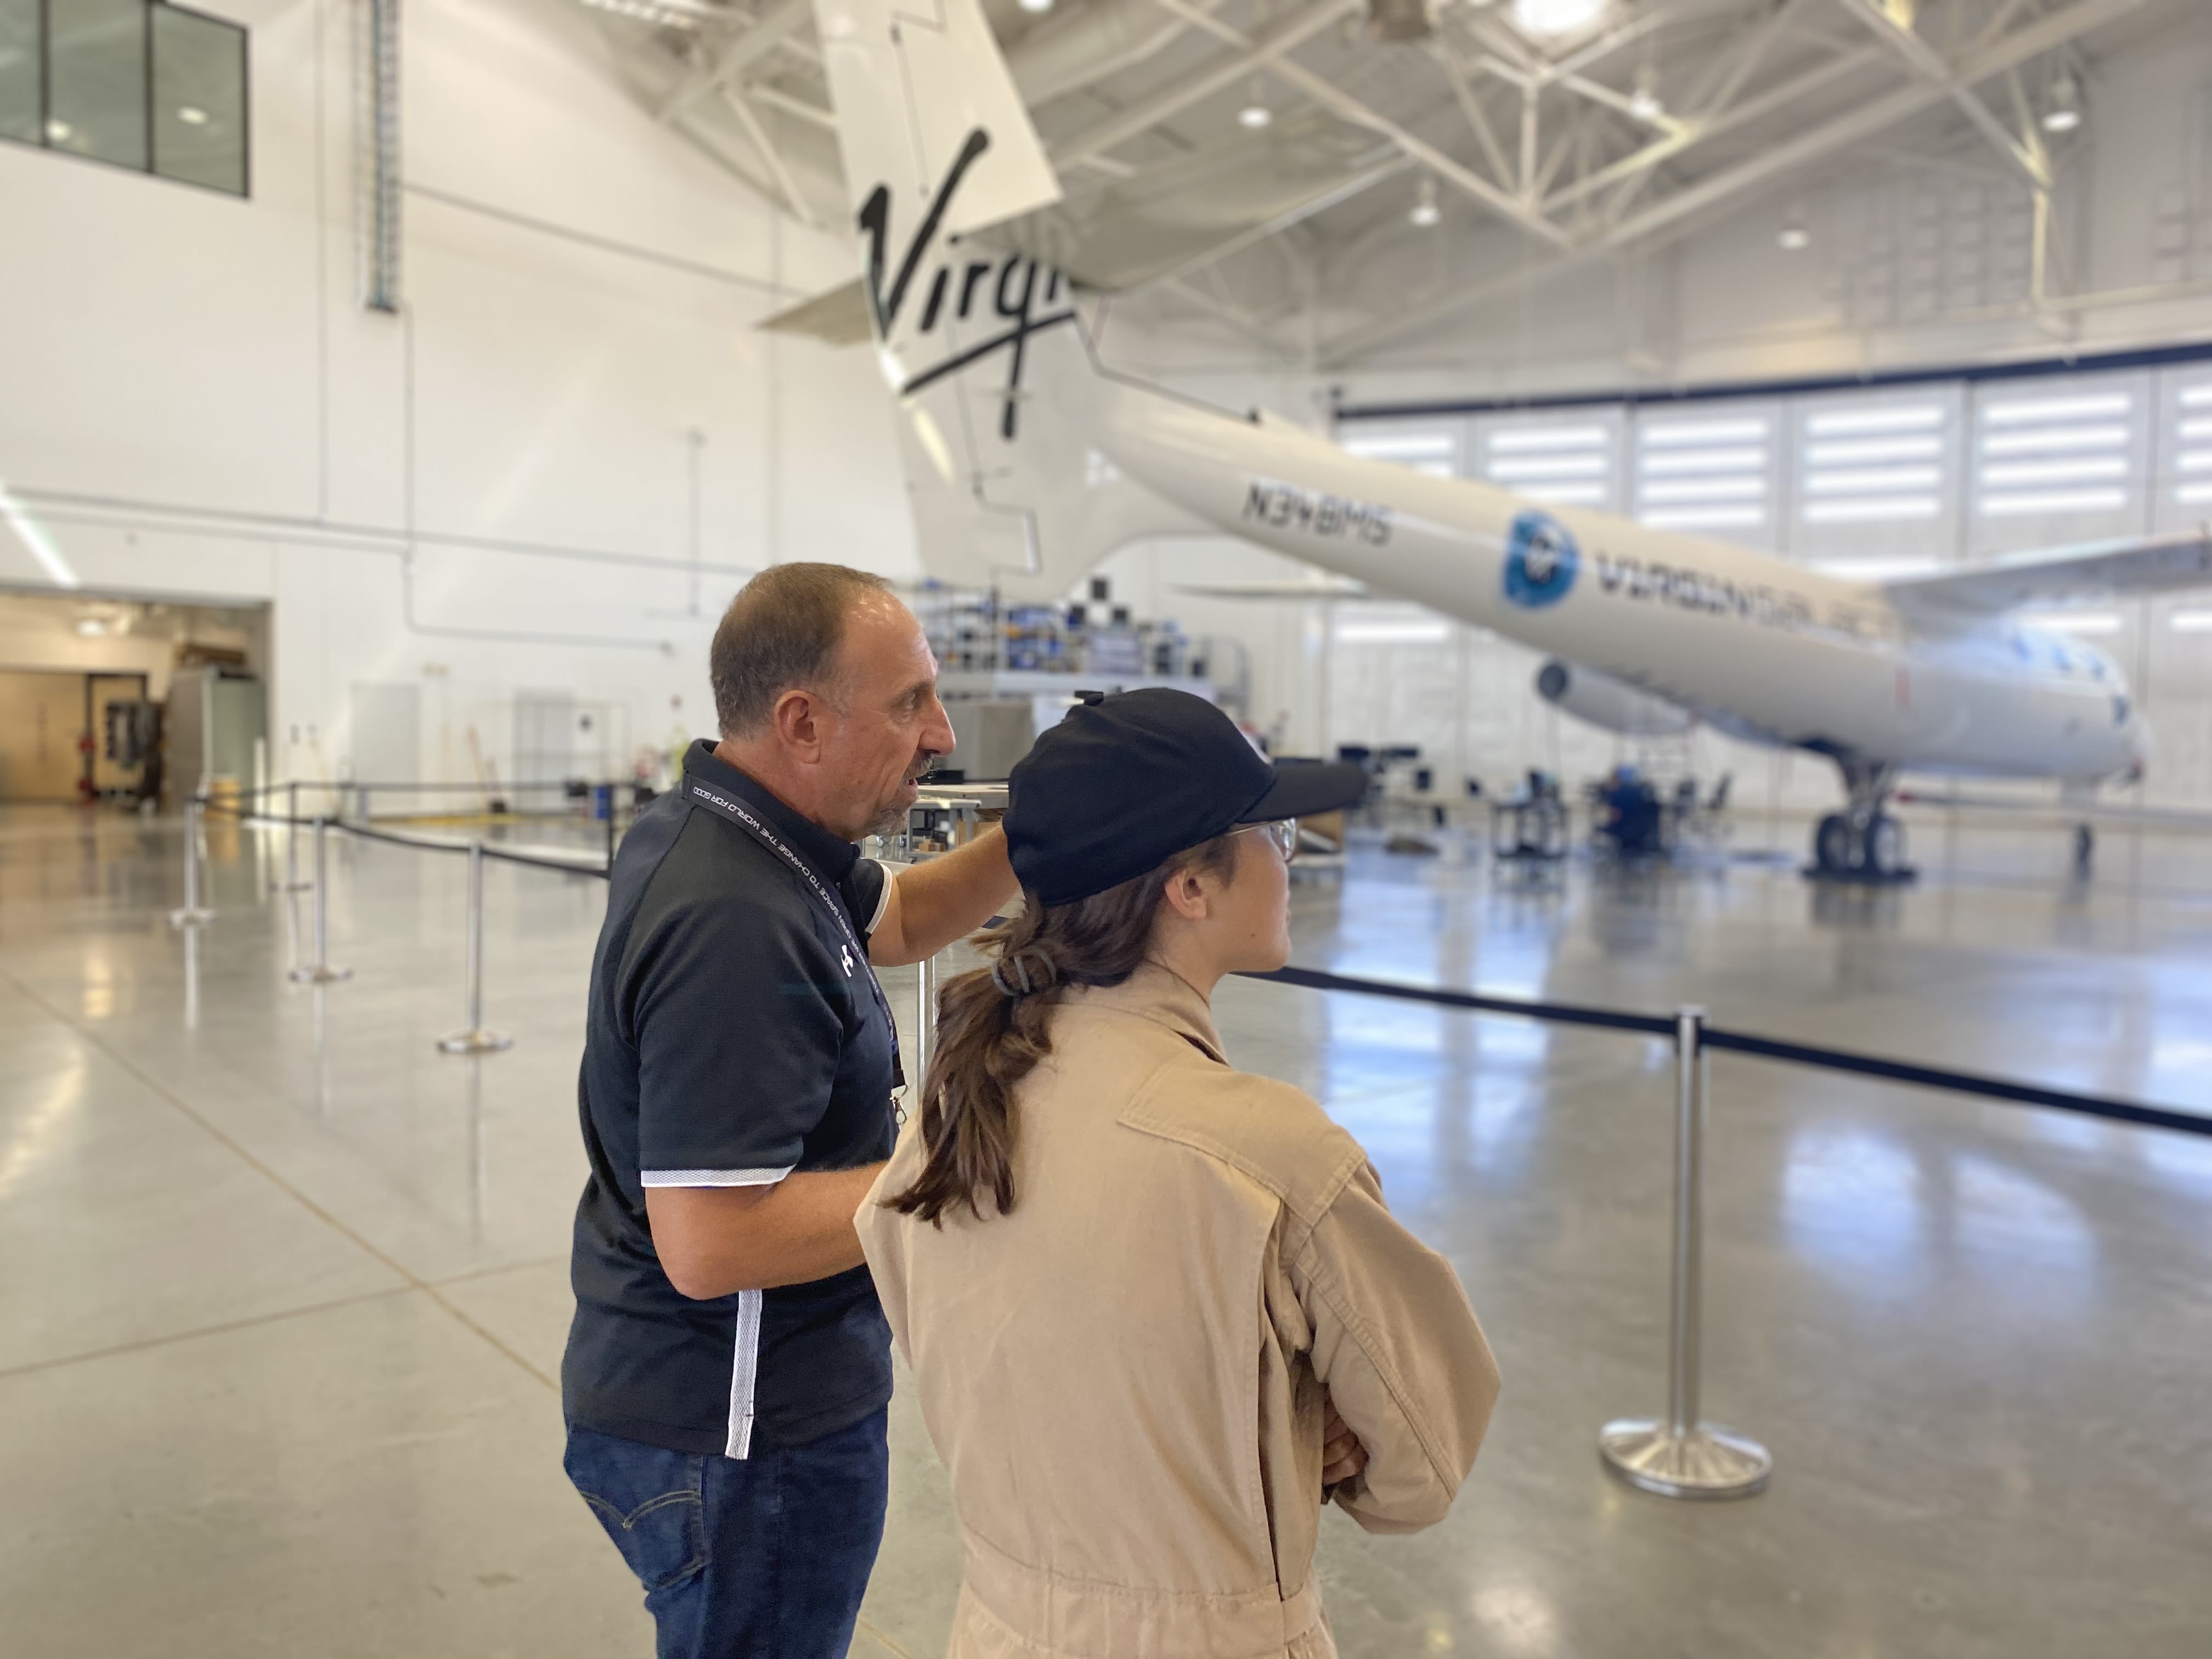 Virgin Galactic pilot Michael Masucci shows Zara Rutherford around Spaceport America